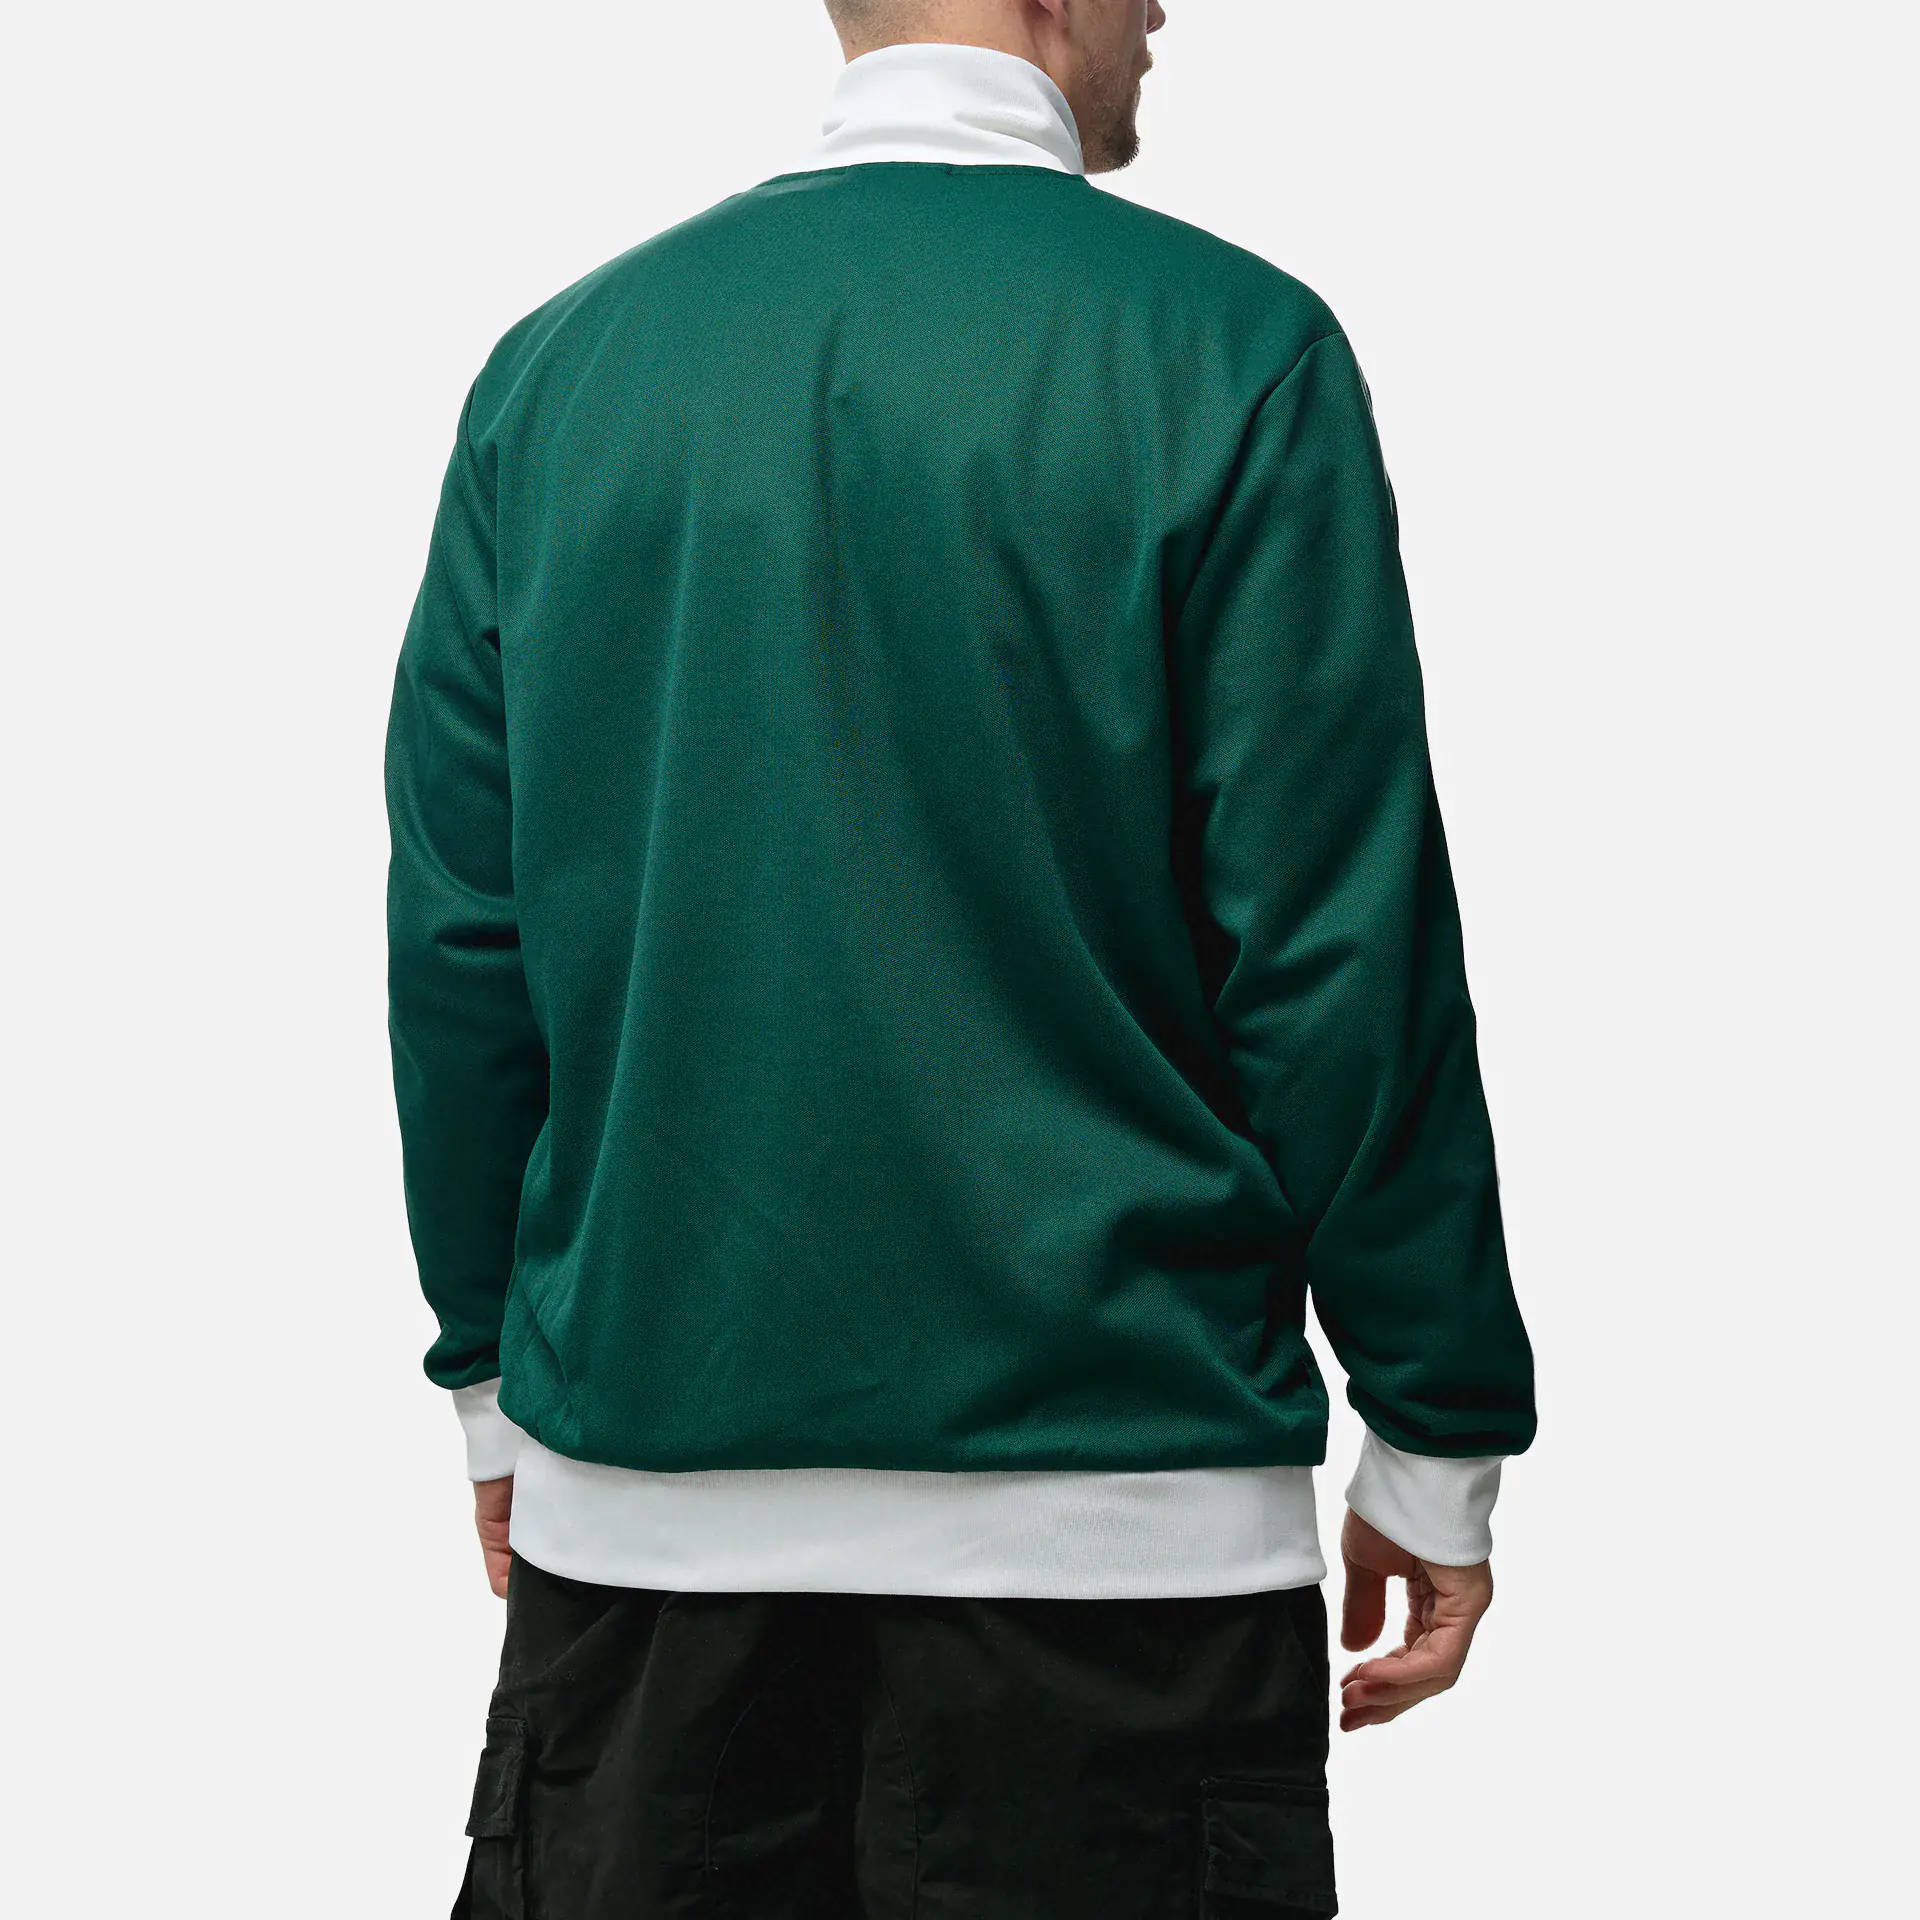 adidas Originals Beckenbauer Track Jacket Collegiate Green